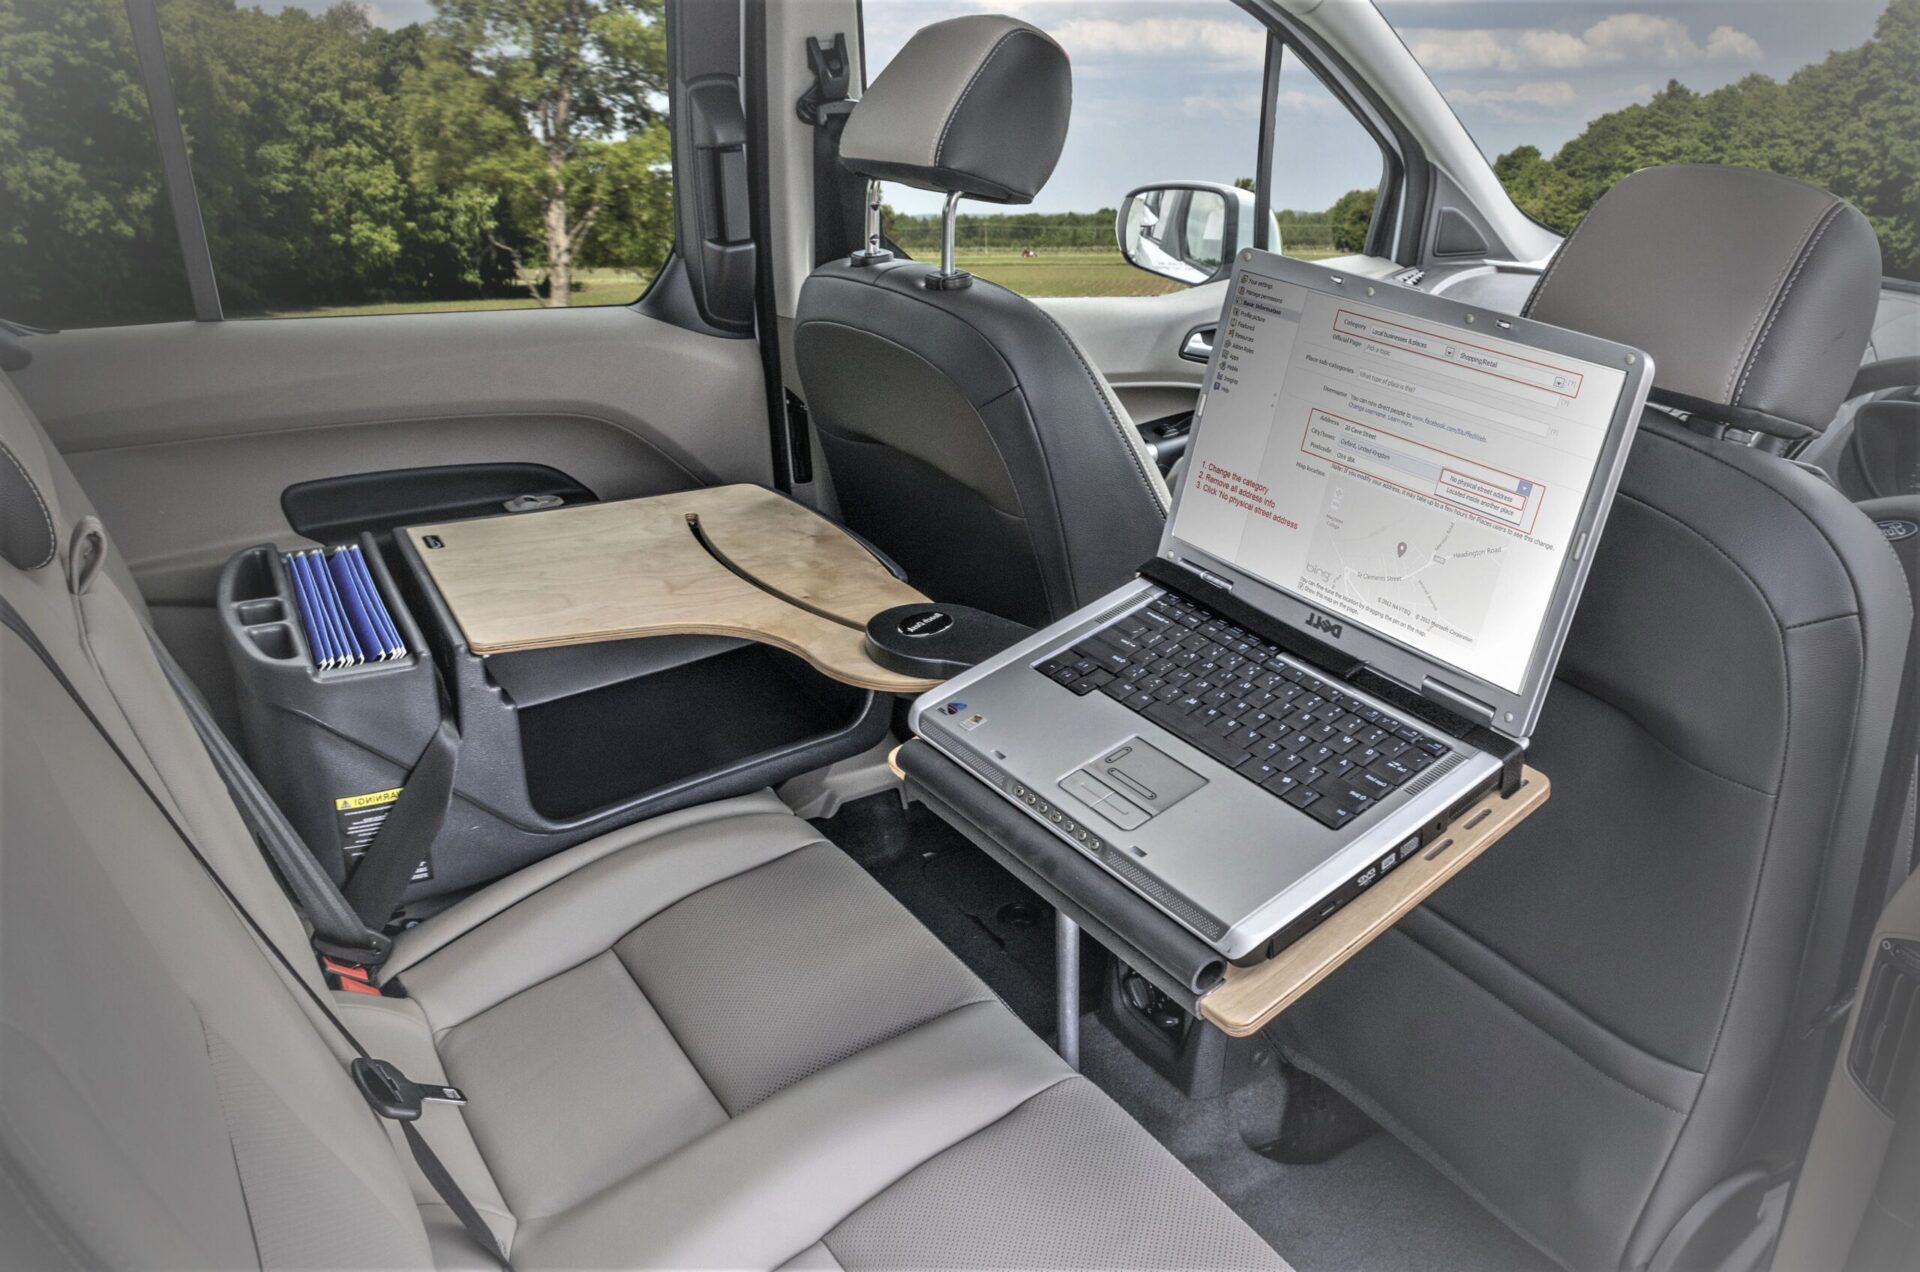 https://mobil-office.dk/wp-content/uploads/2021/11/Reach-Desk-Back-Seat-Left-Side-Vehicle-scaled-2.jpg